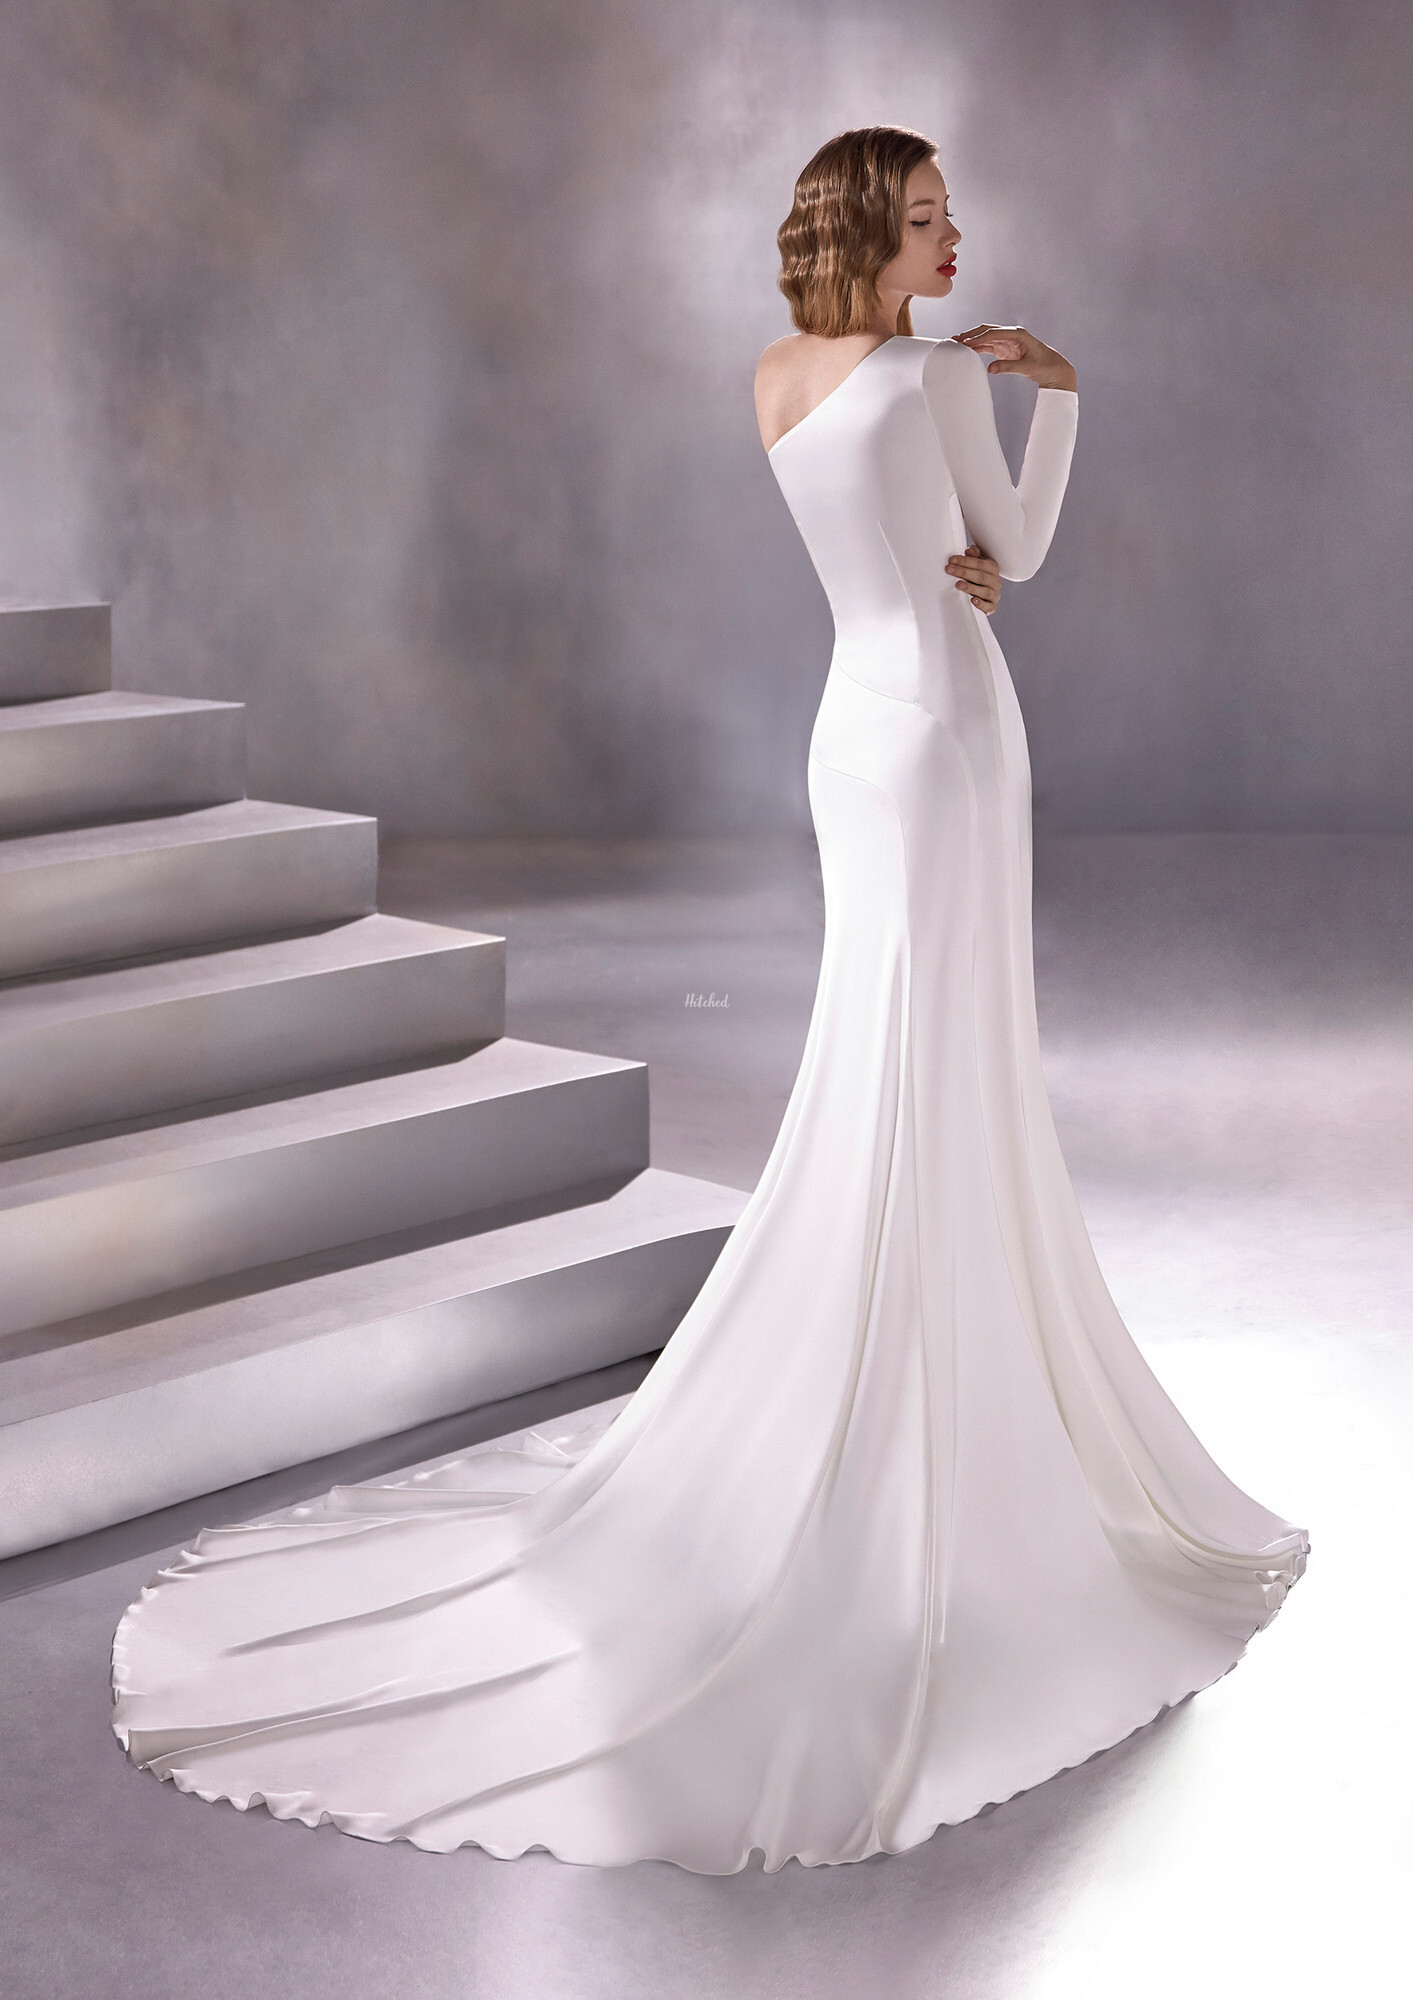 SUNDROP Wedding Dress from Atelier Pronovias - hitched.co.uk